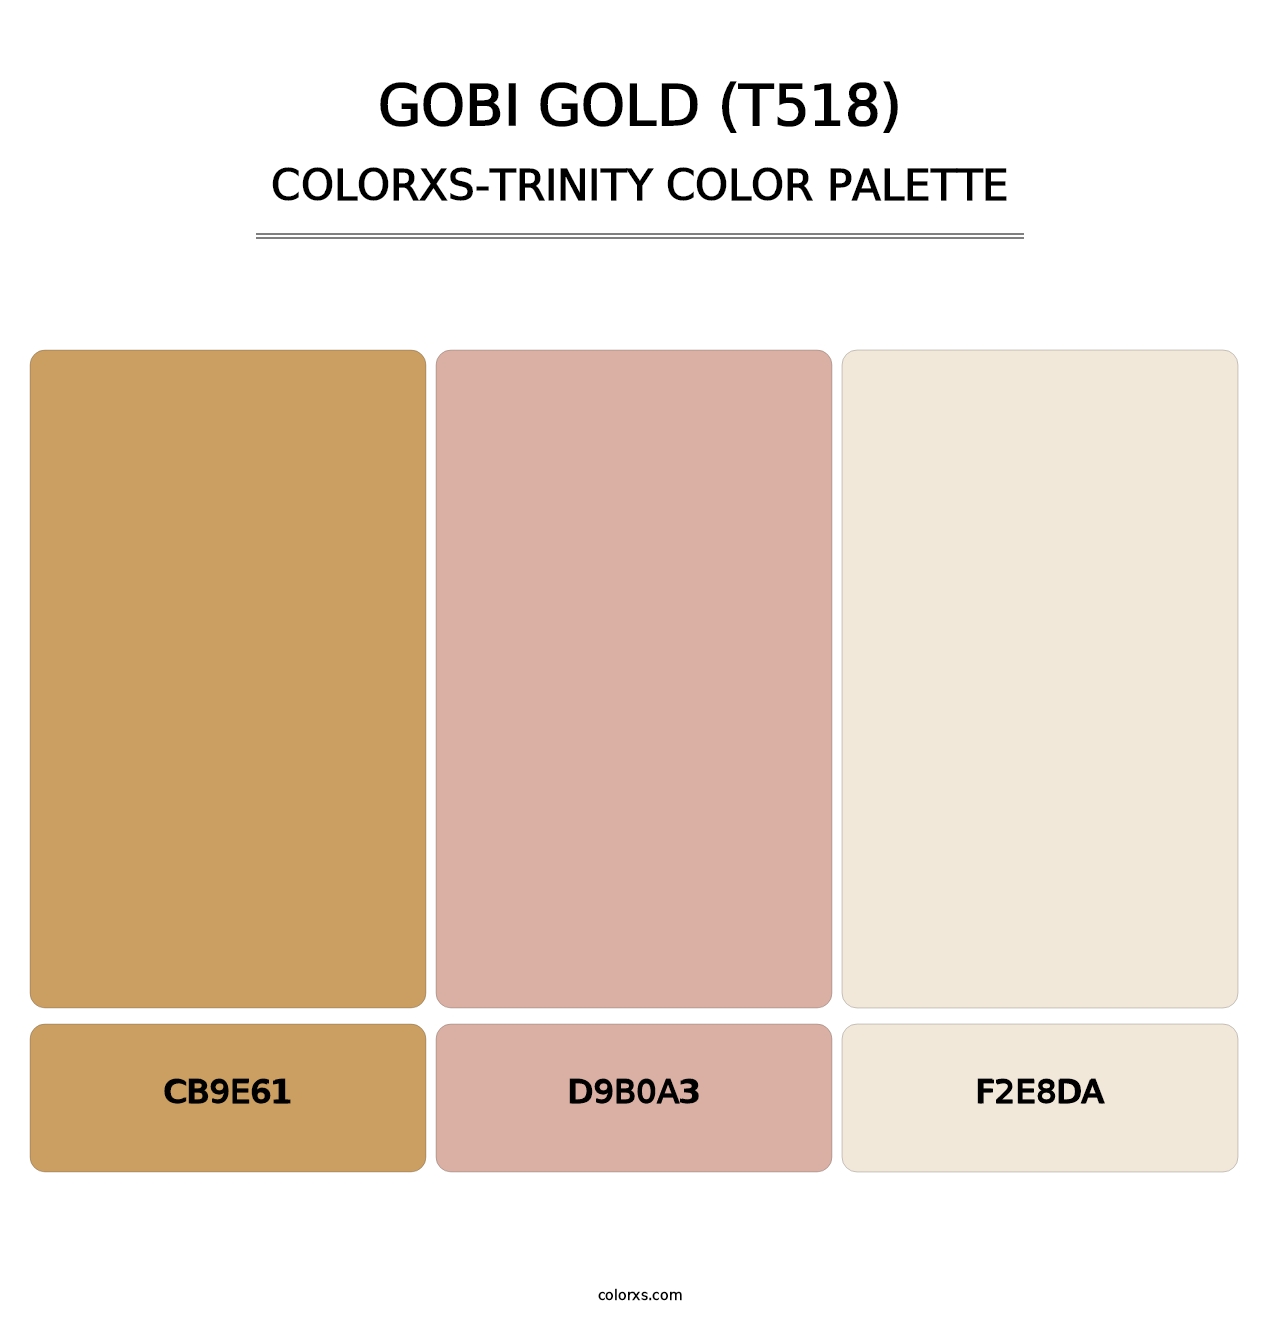 Gobi Gold (T518) - Colorxs Trinity Palette